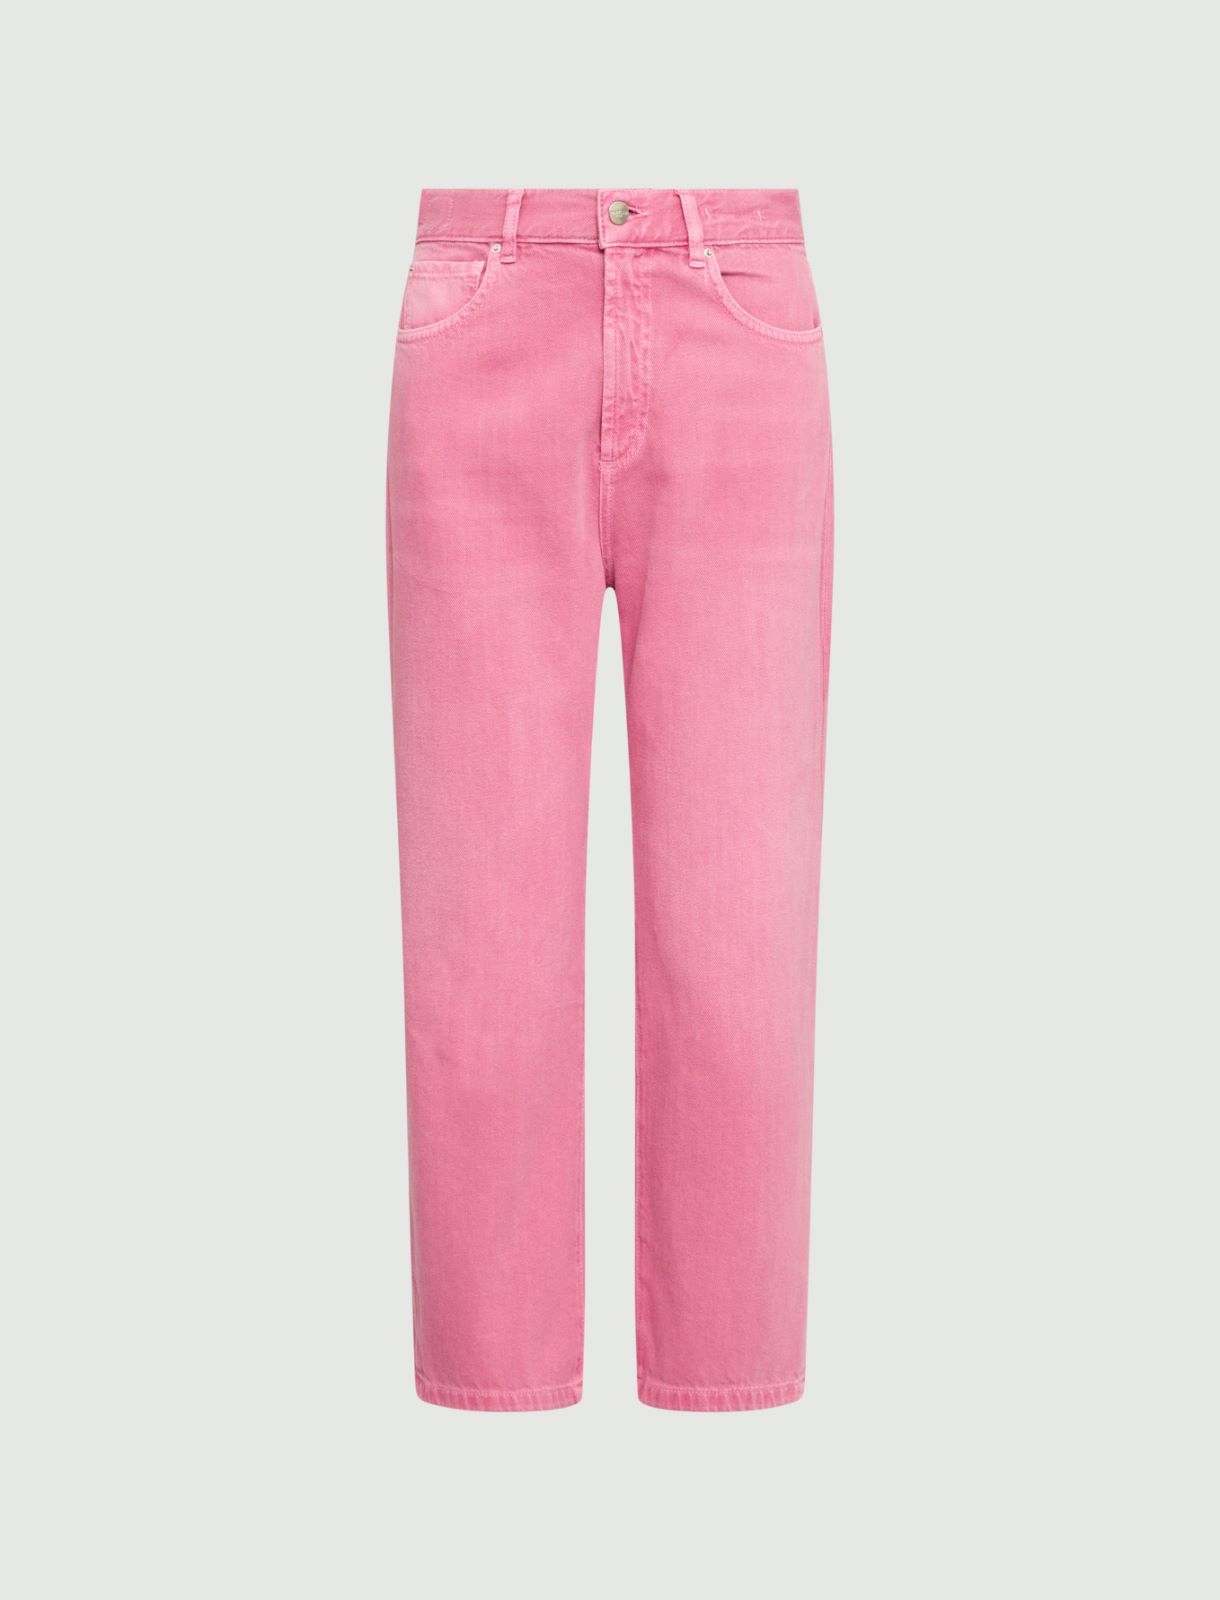 Mom Fit Jeans - Shocking pink - Marella - 6